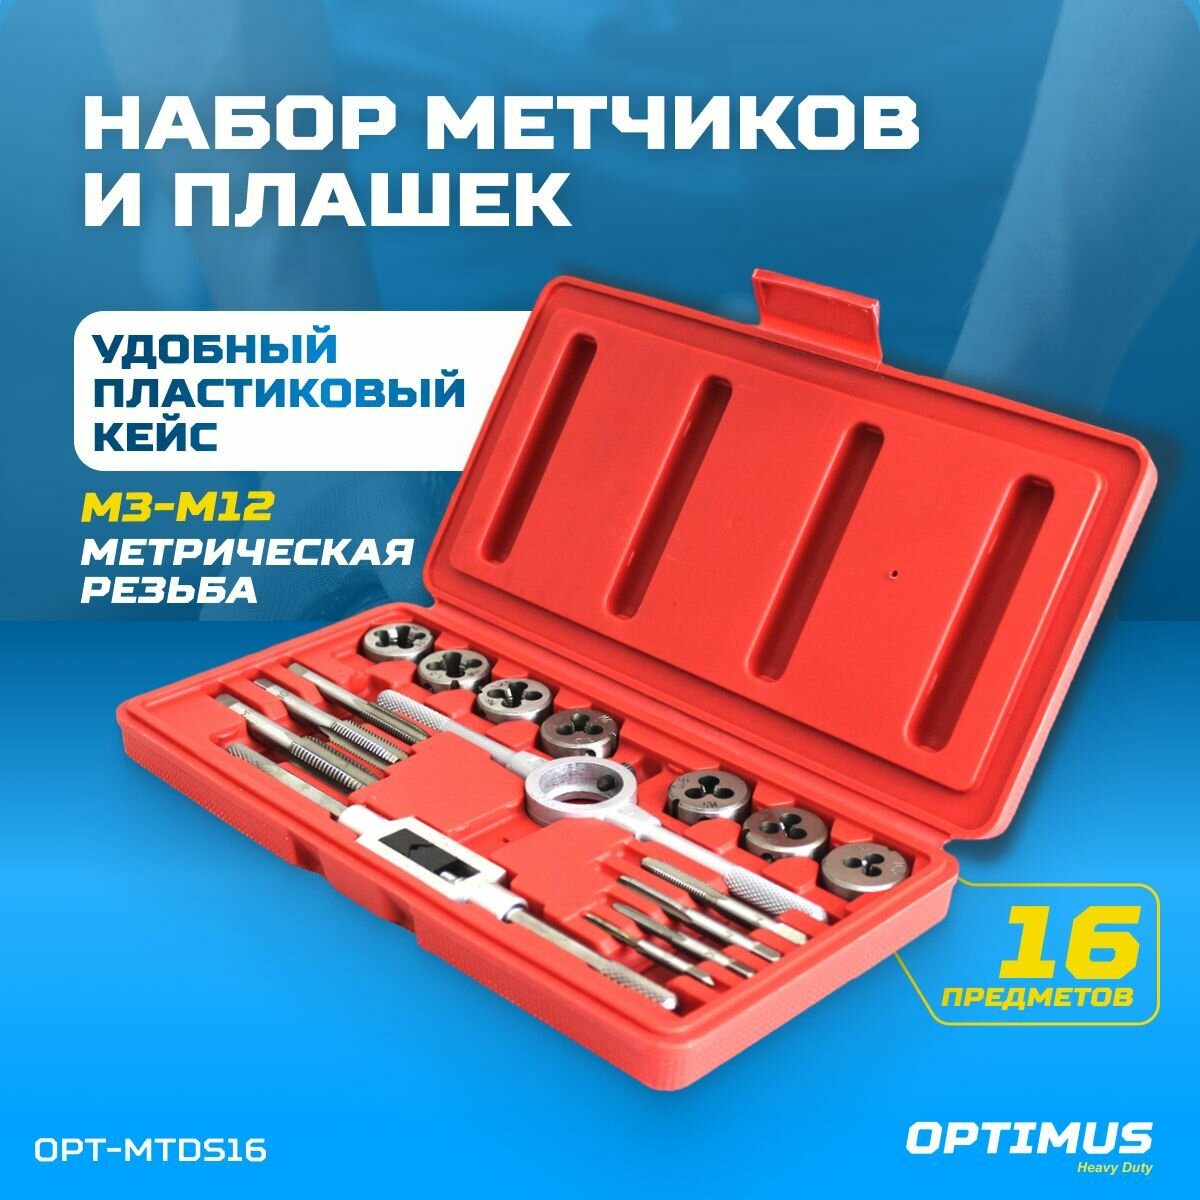 OPT-MTDS16 Набор метчиков и плашек М3-М12 16 предметов метрическая резьба